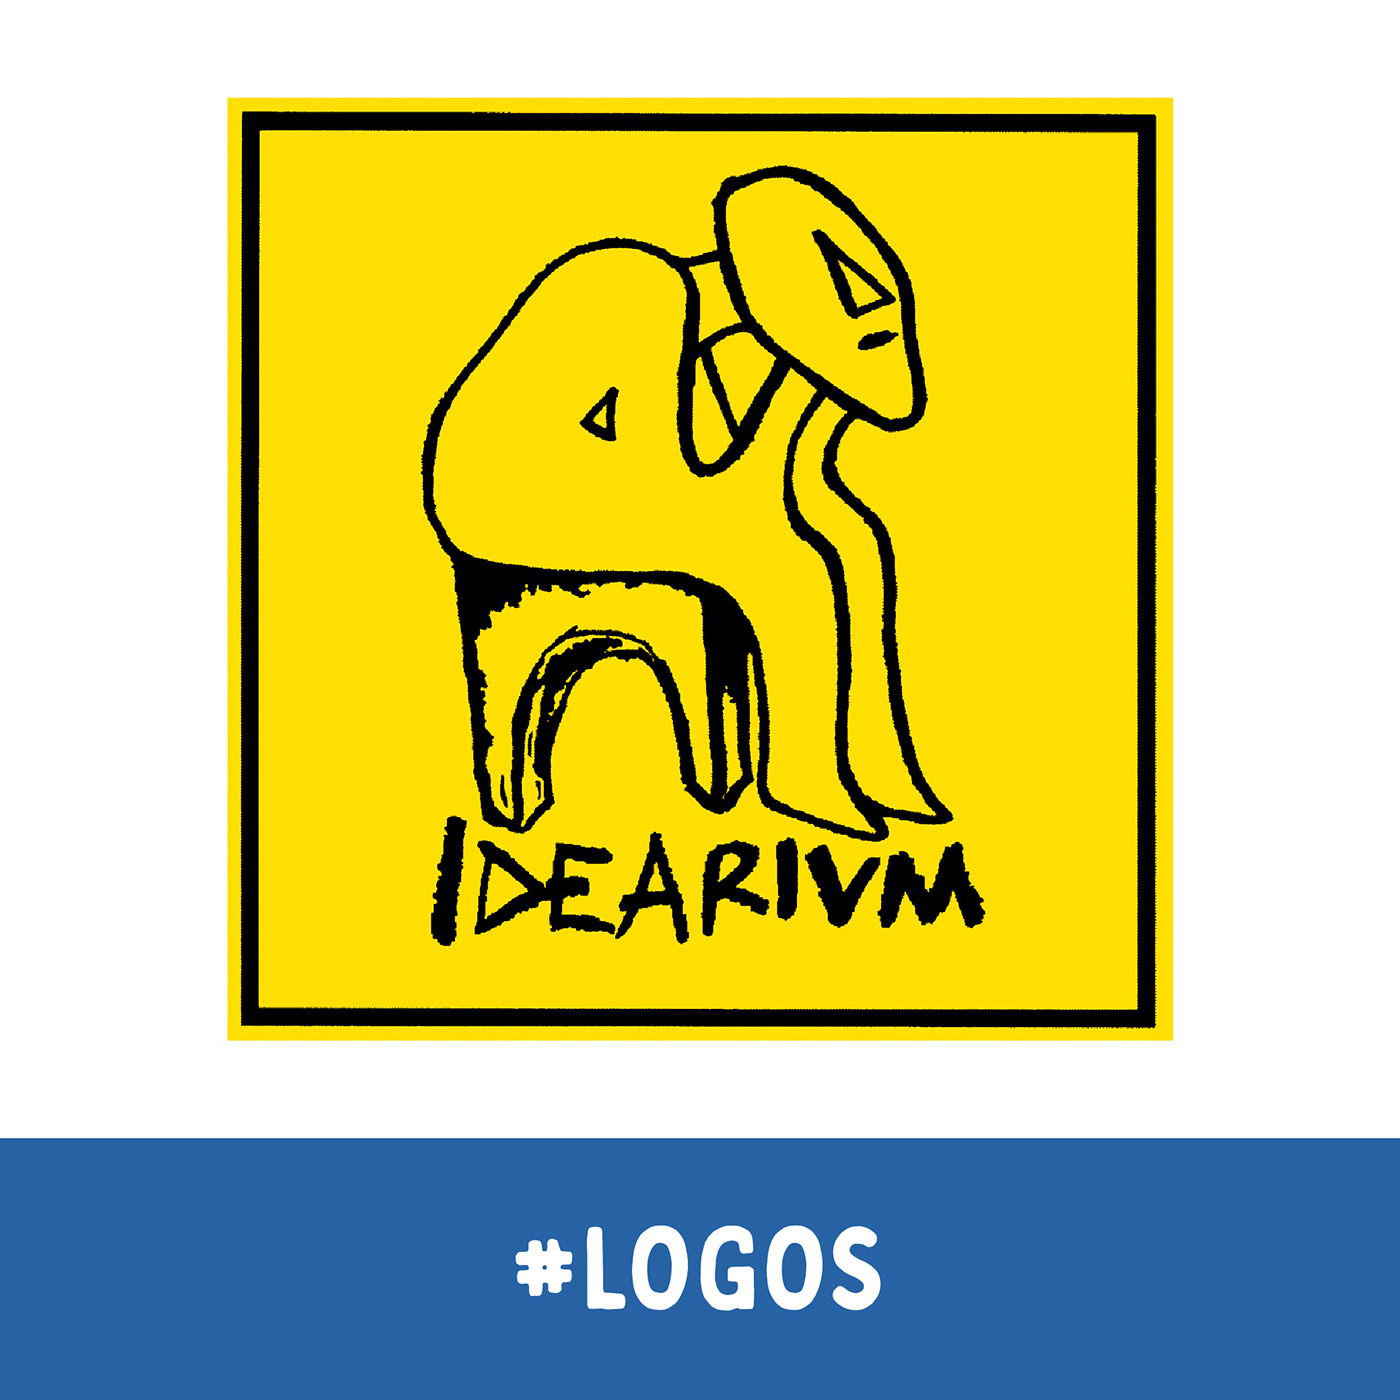 Logotipo extinto para agencia creativa personal. Inspirado en el famoso pensador de Rodin.